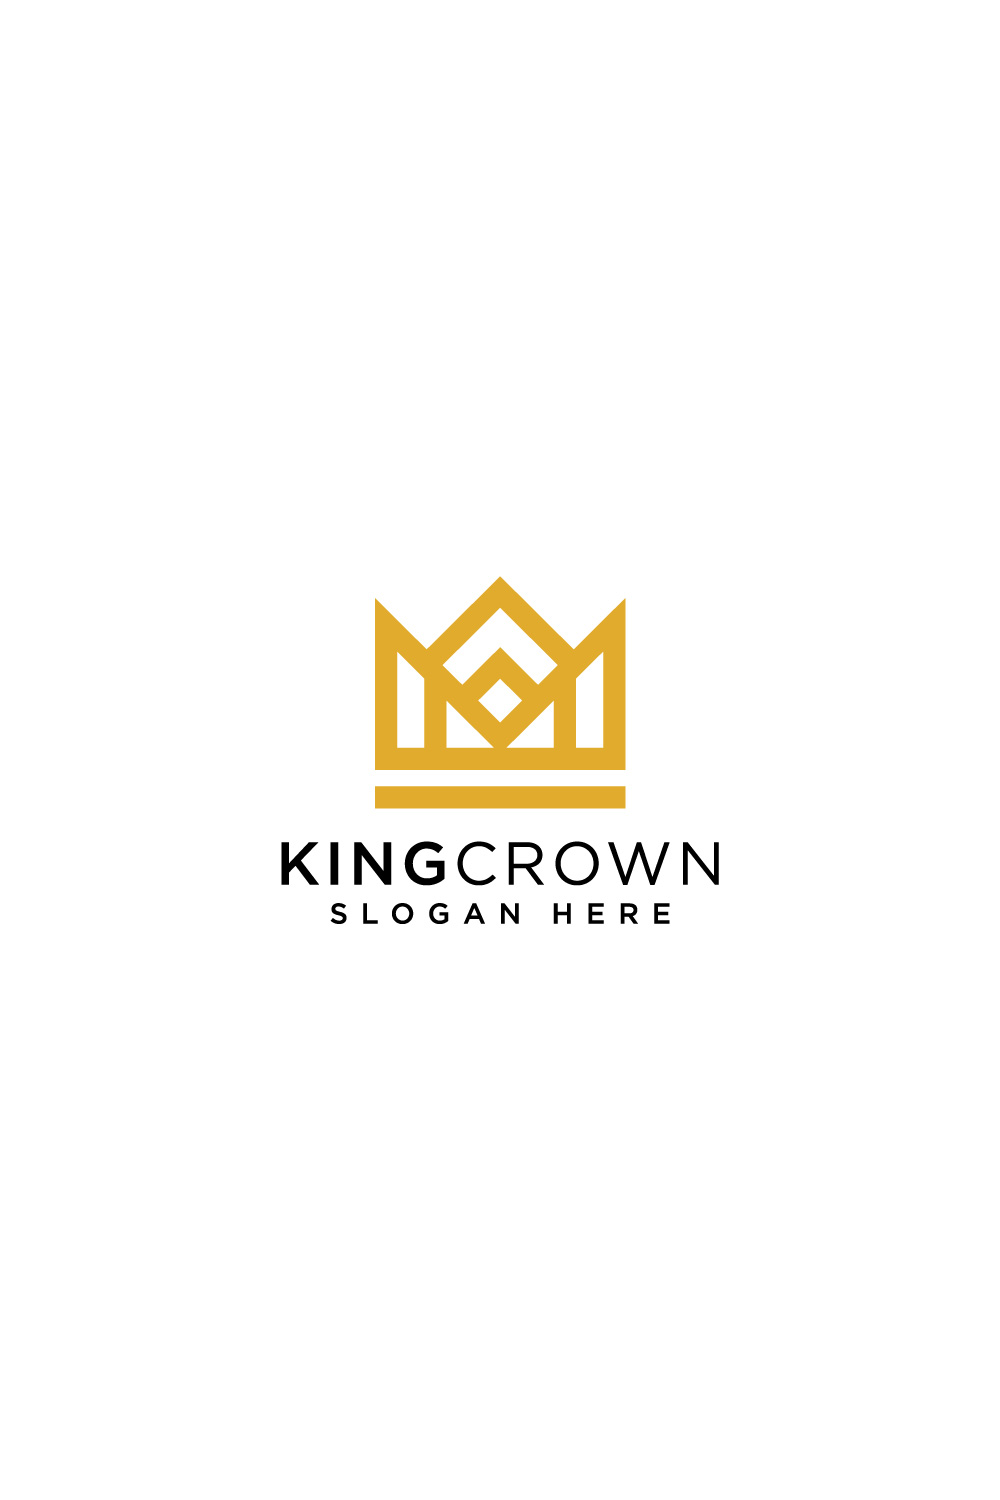 crown logo vector design pinterest preview image.